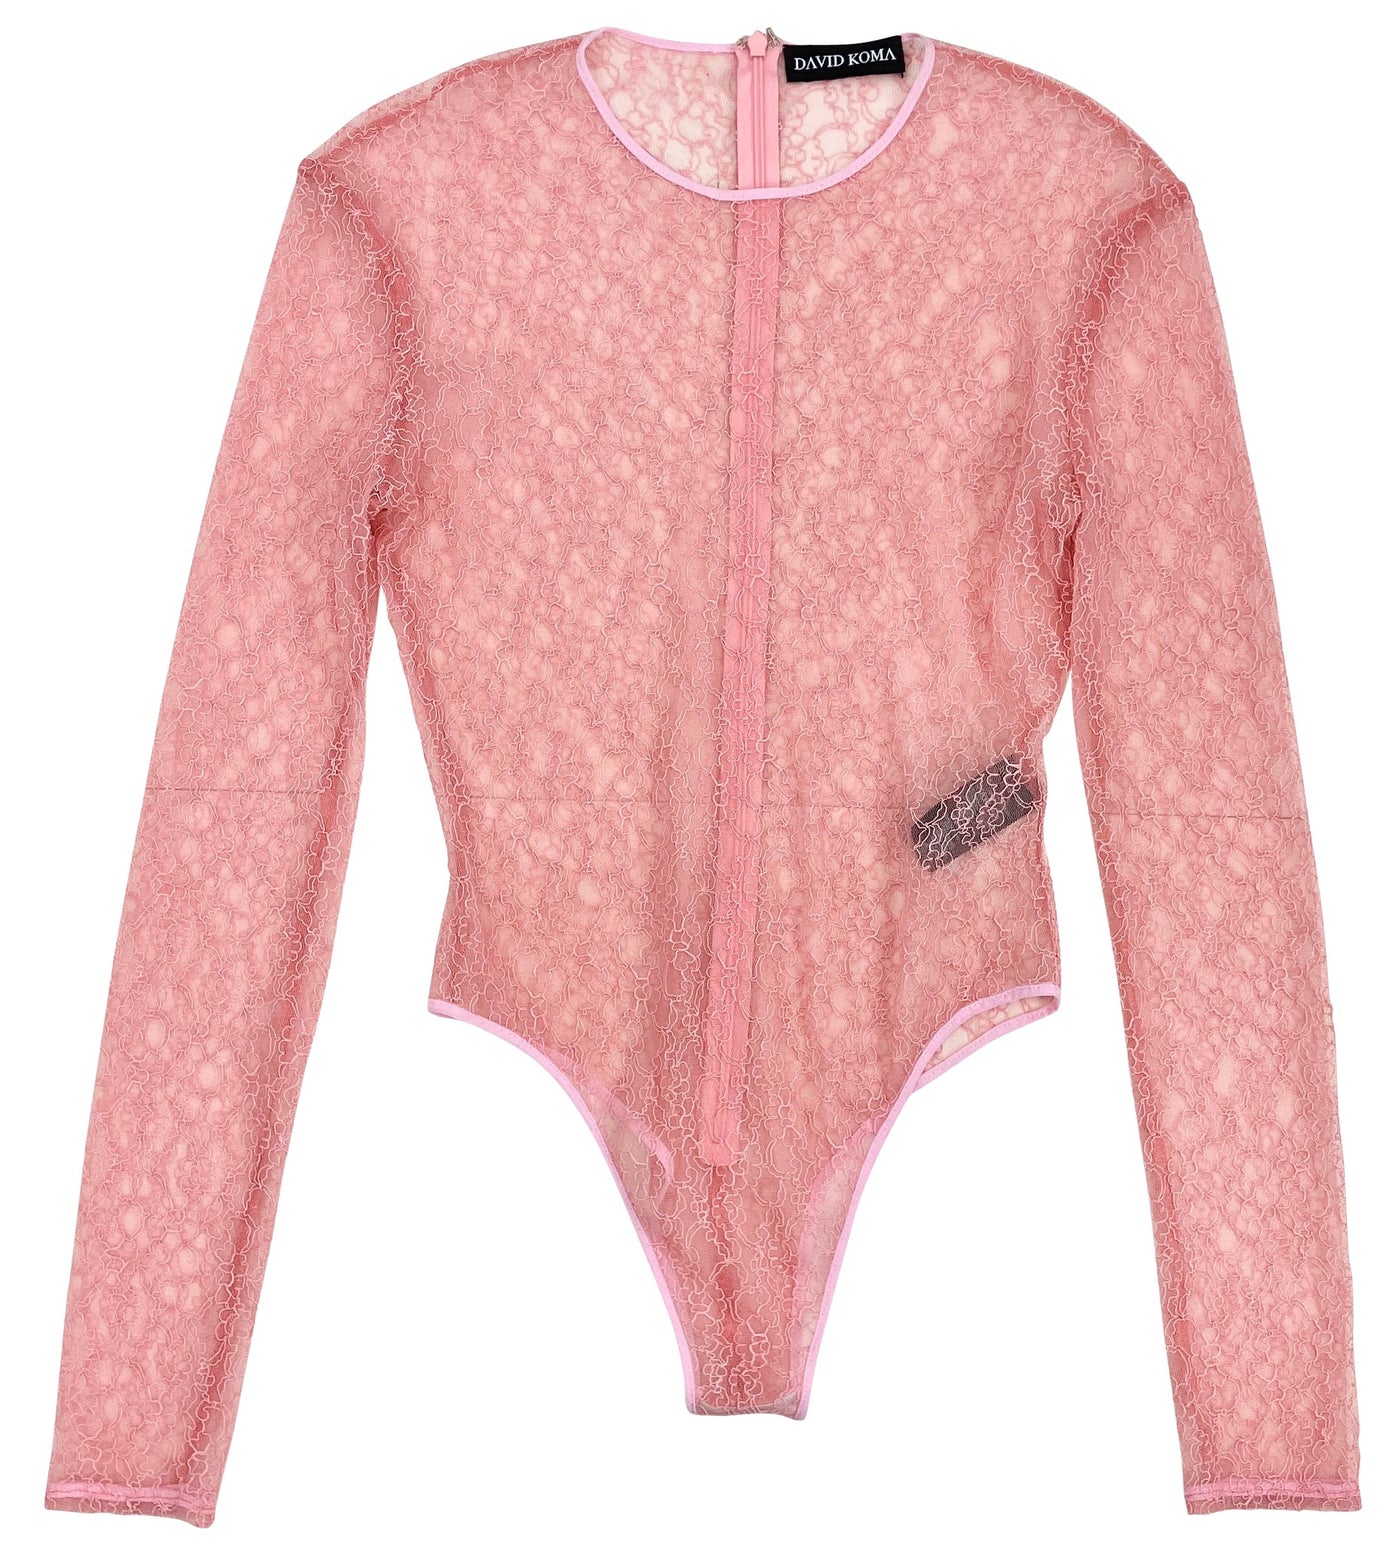 David Koma Long Sleeve Lace Bodysuit in Pink - Discounts on David Koma at UAL